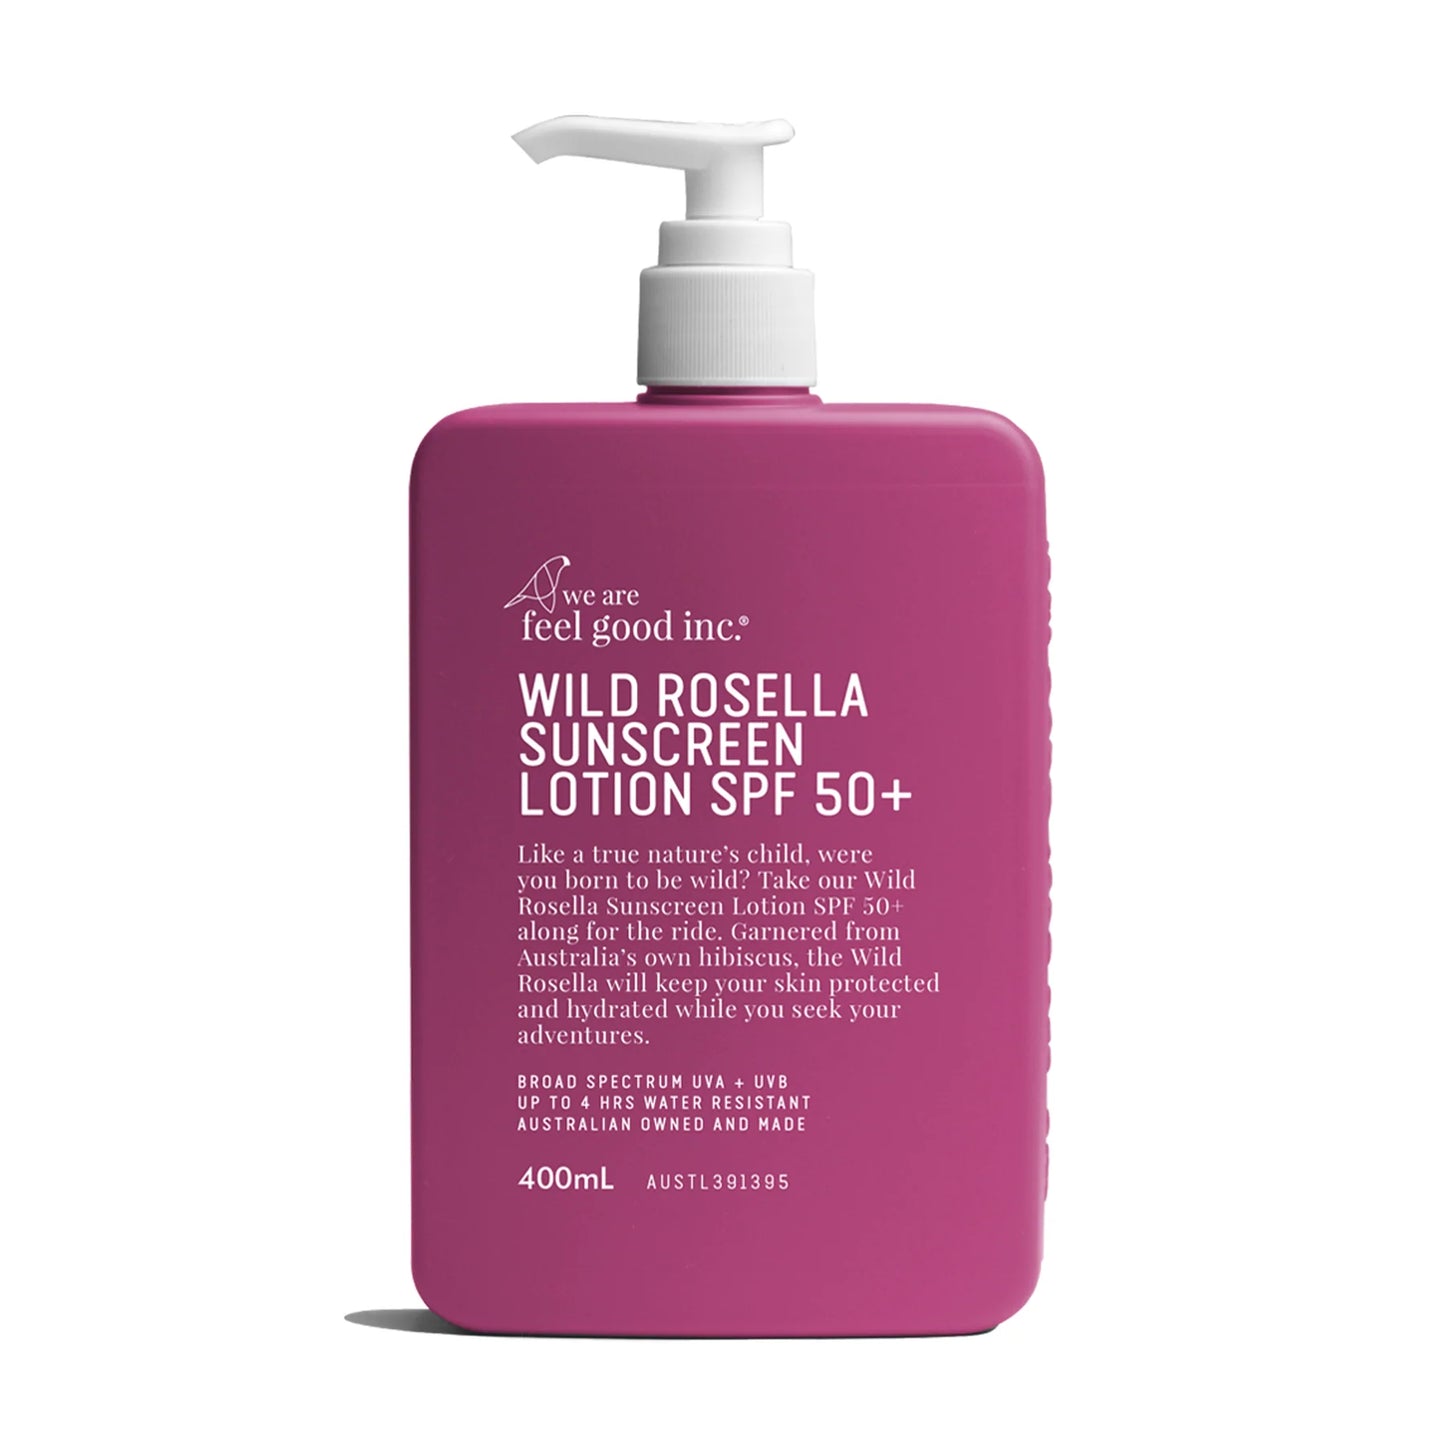 We Are Feel Good Inc - Wild Rosella Sunscreen SPF 50+